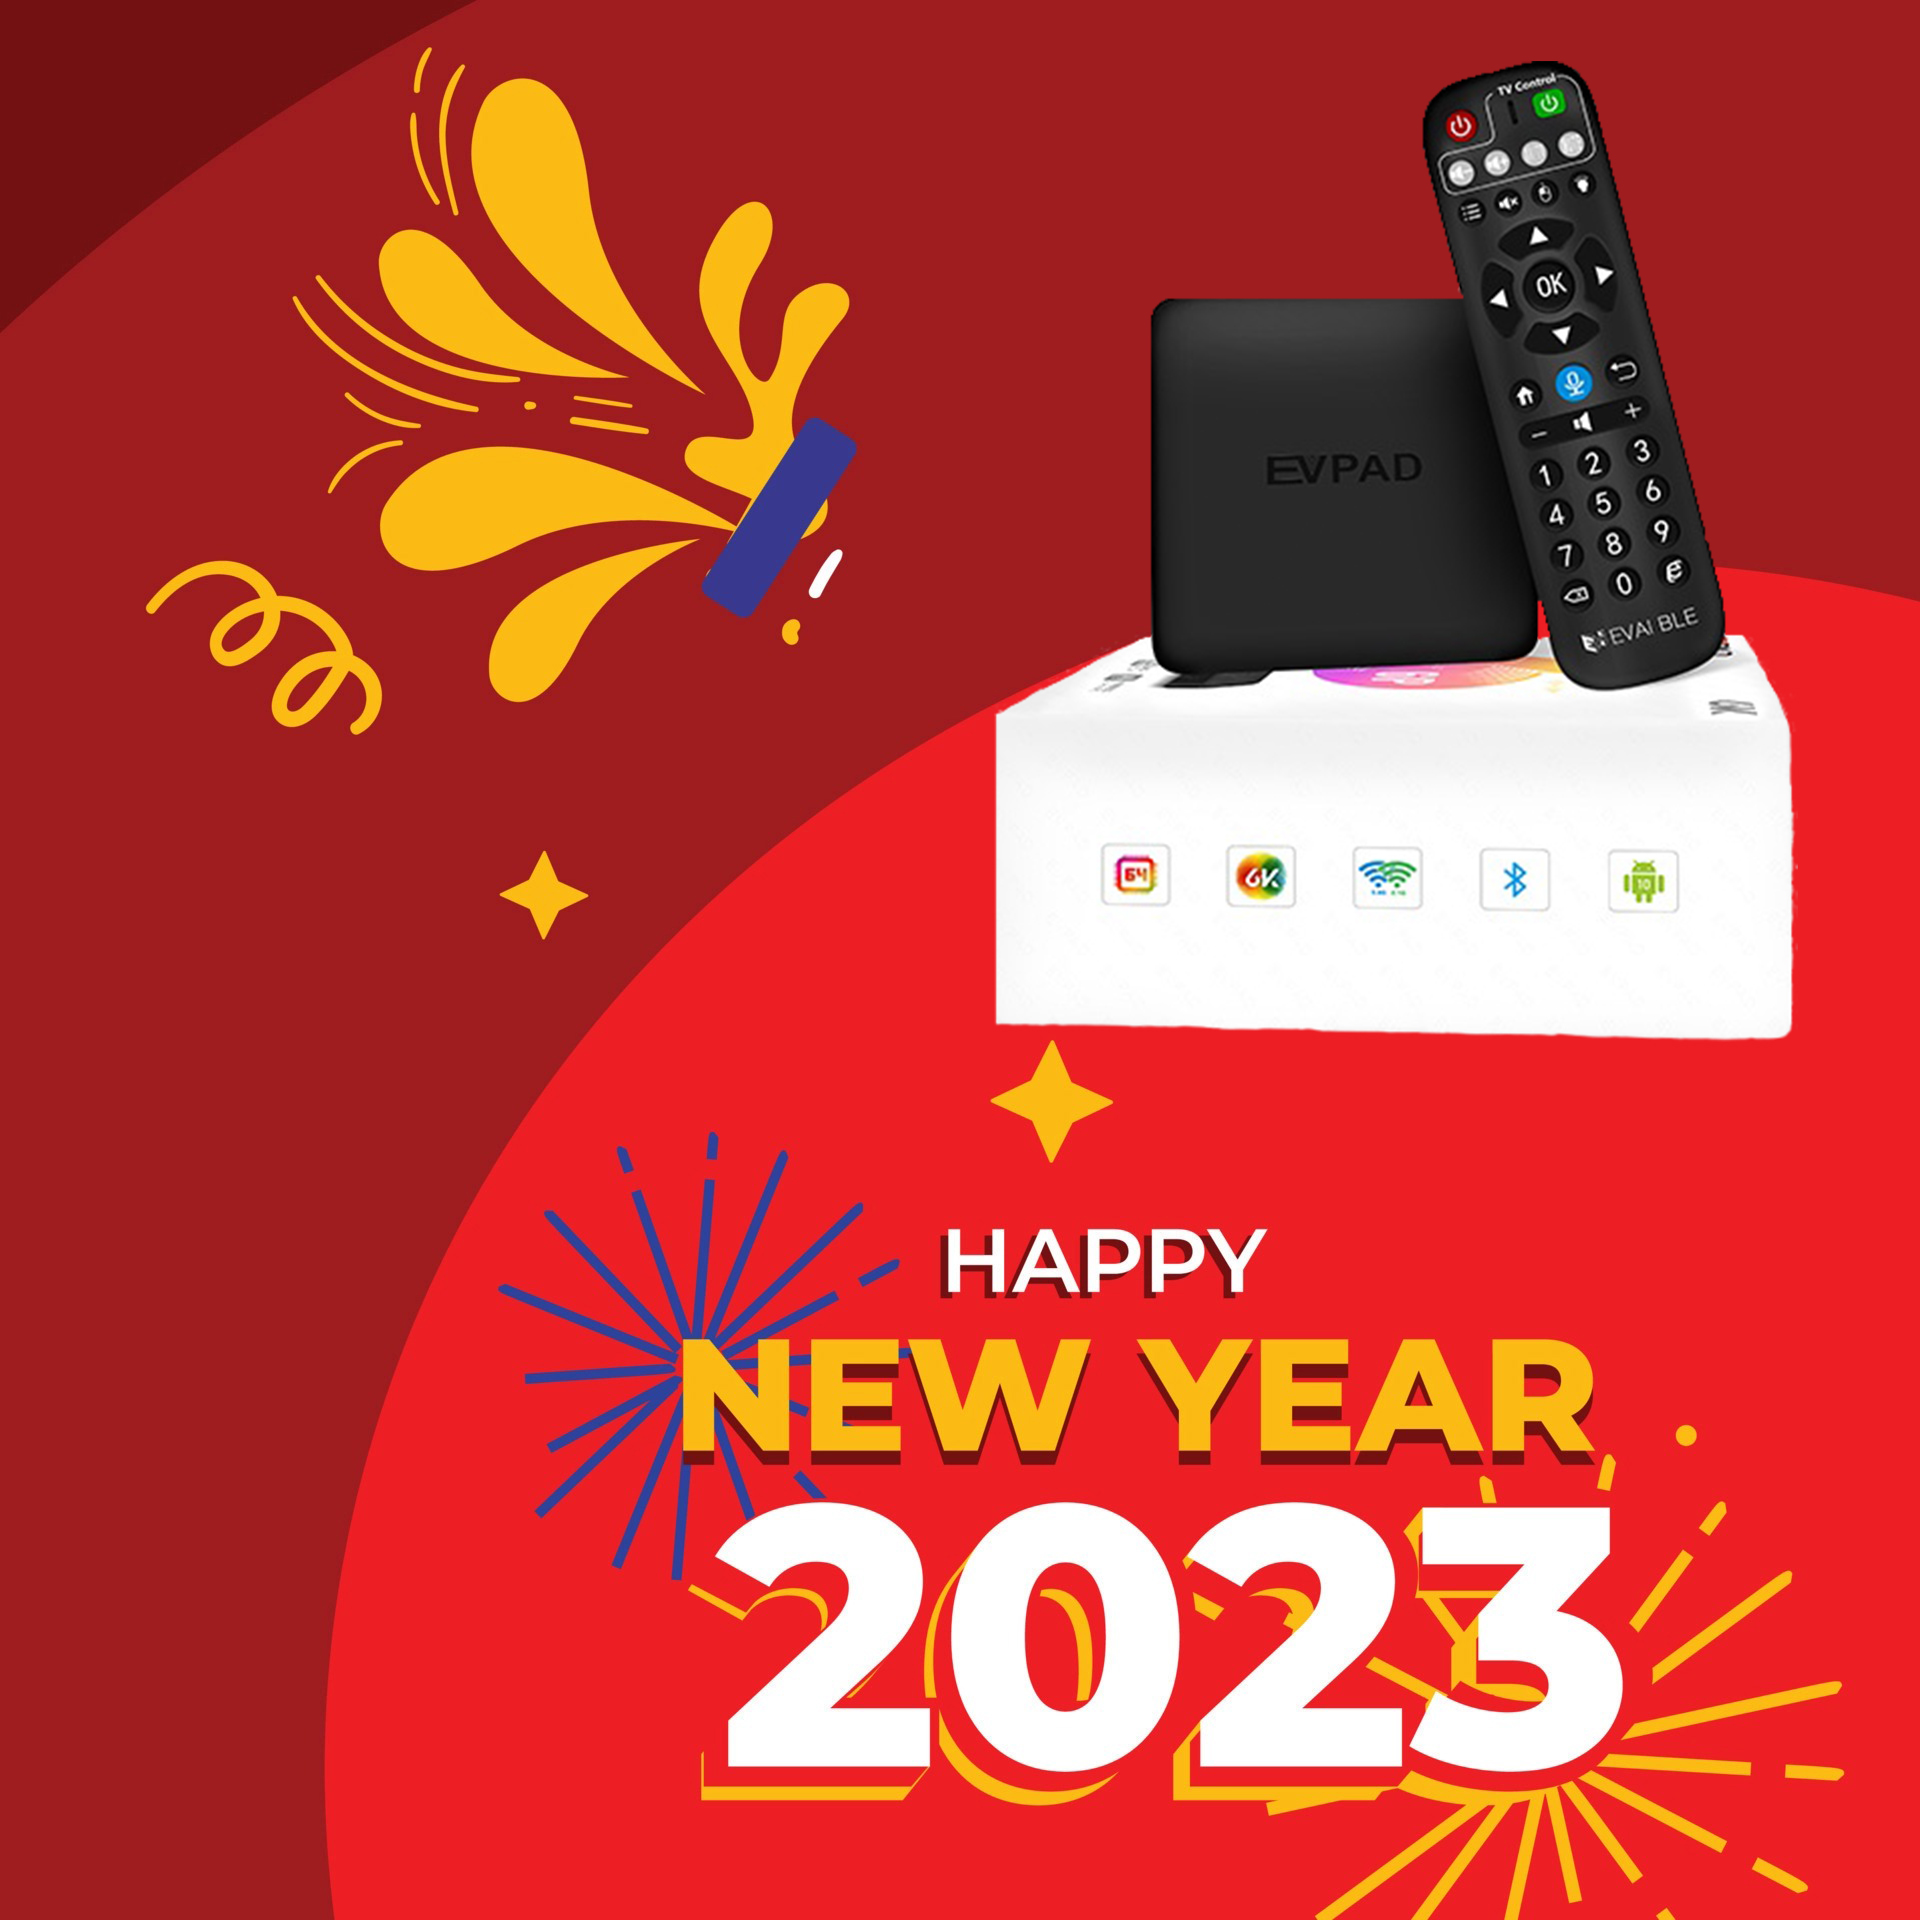 2023 Happy New Year - EVPAD Smart Android TV Box